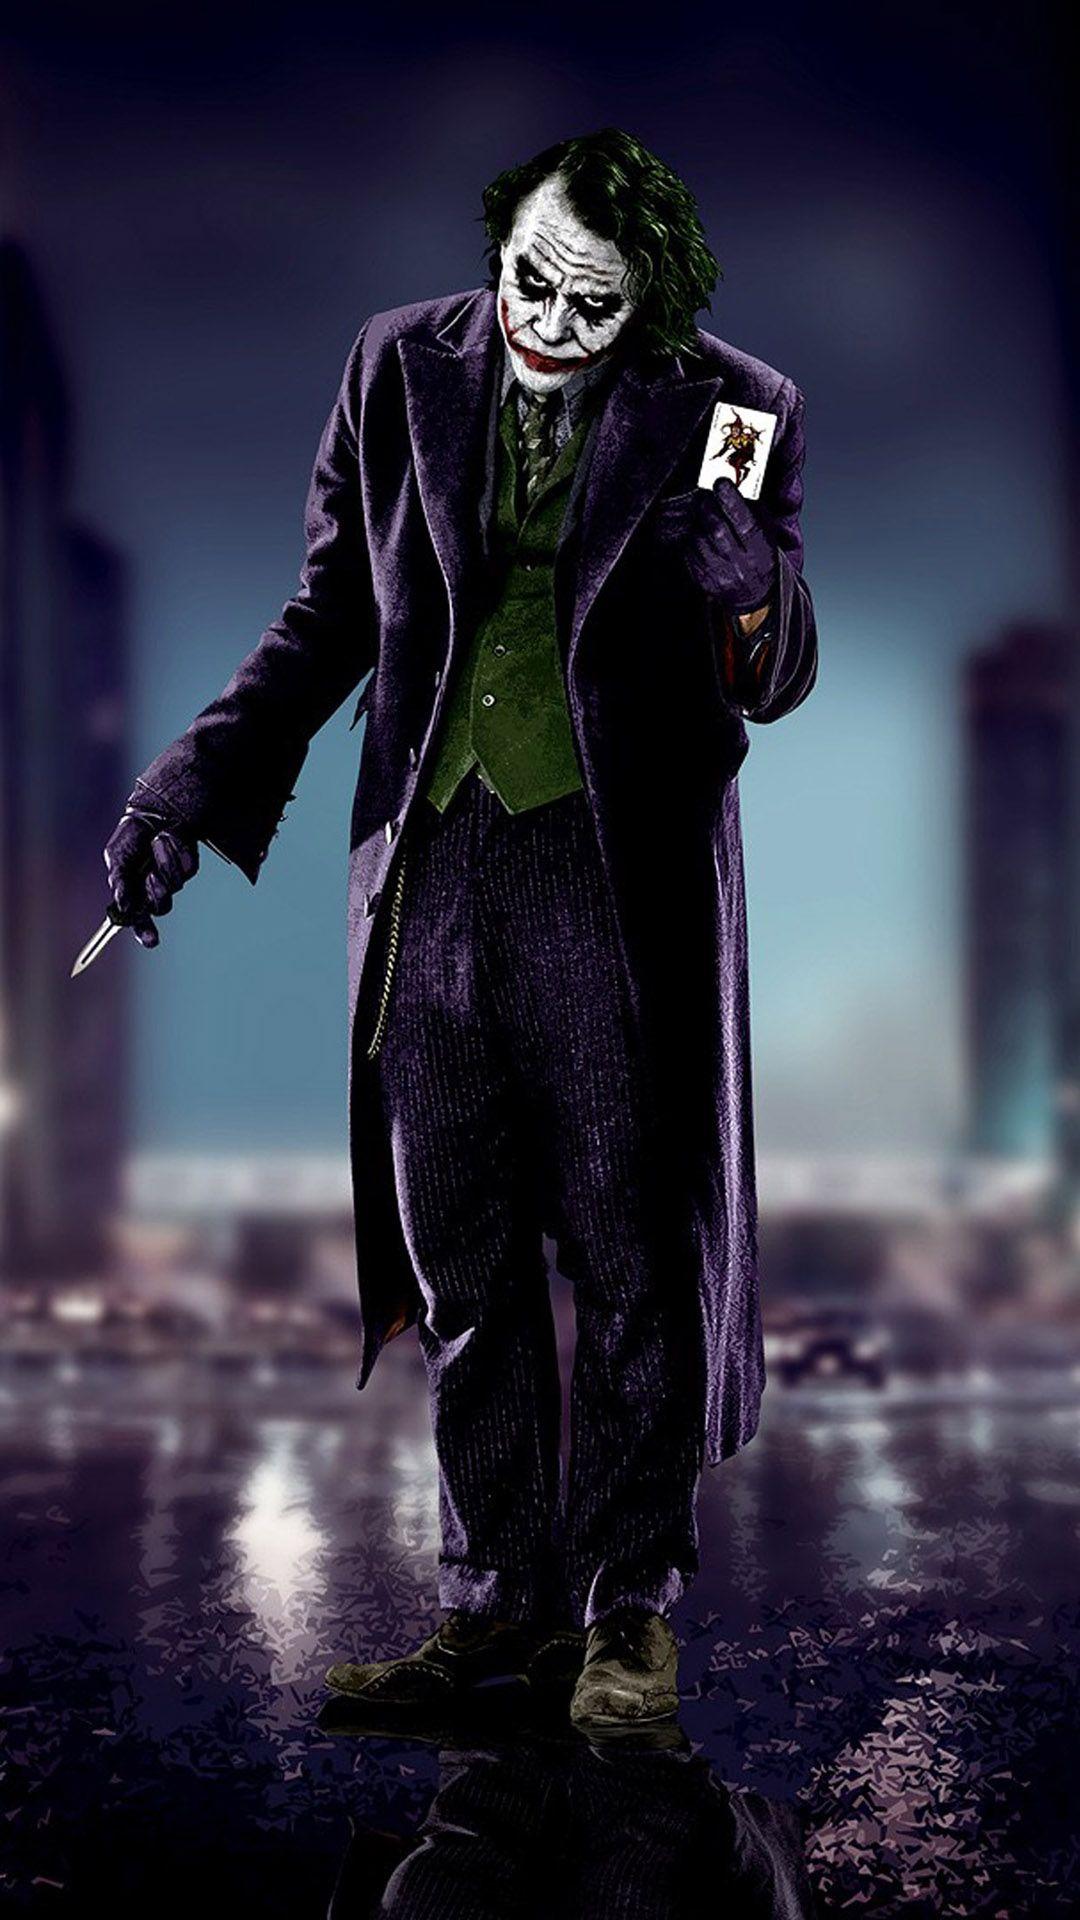 Joker Mobile Wallpapers - Top Free Joker Mobile Backgrounds ...